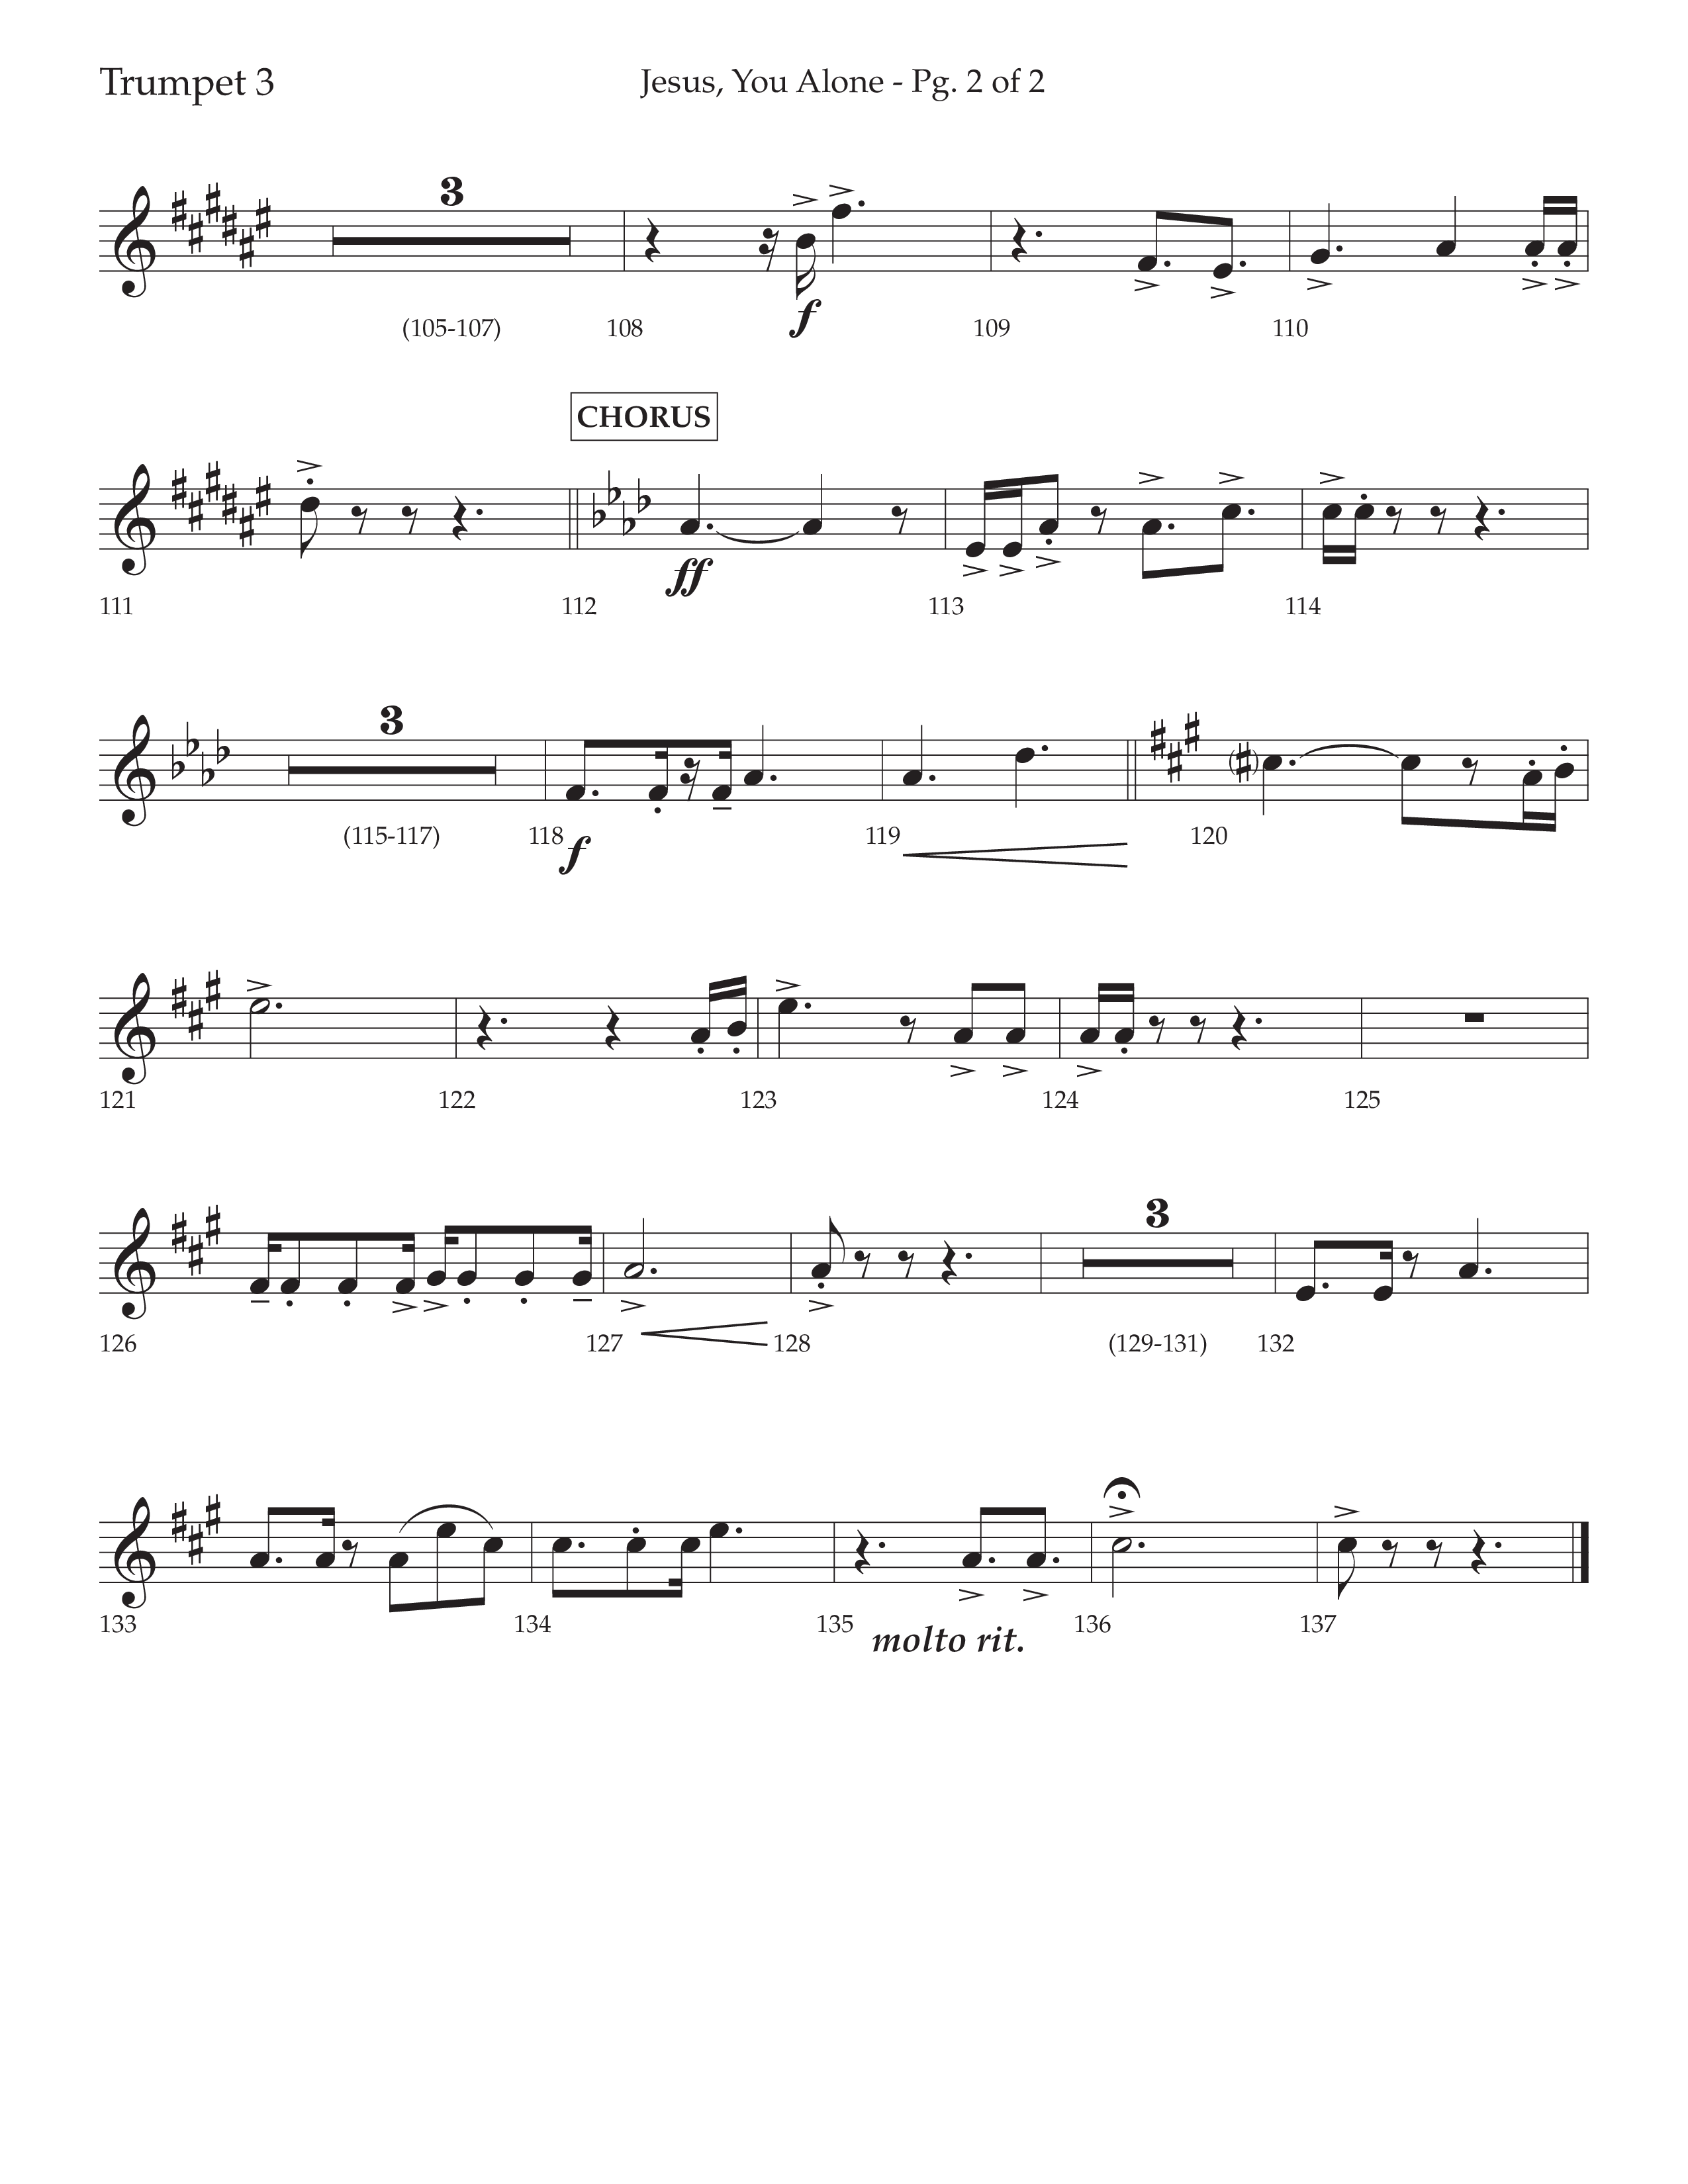 Jesus You Alone (Choral Anthem SATB) Trumpet 3 (Lifeway Choral / Arr. David Wise / Orch. Bradley Knight)